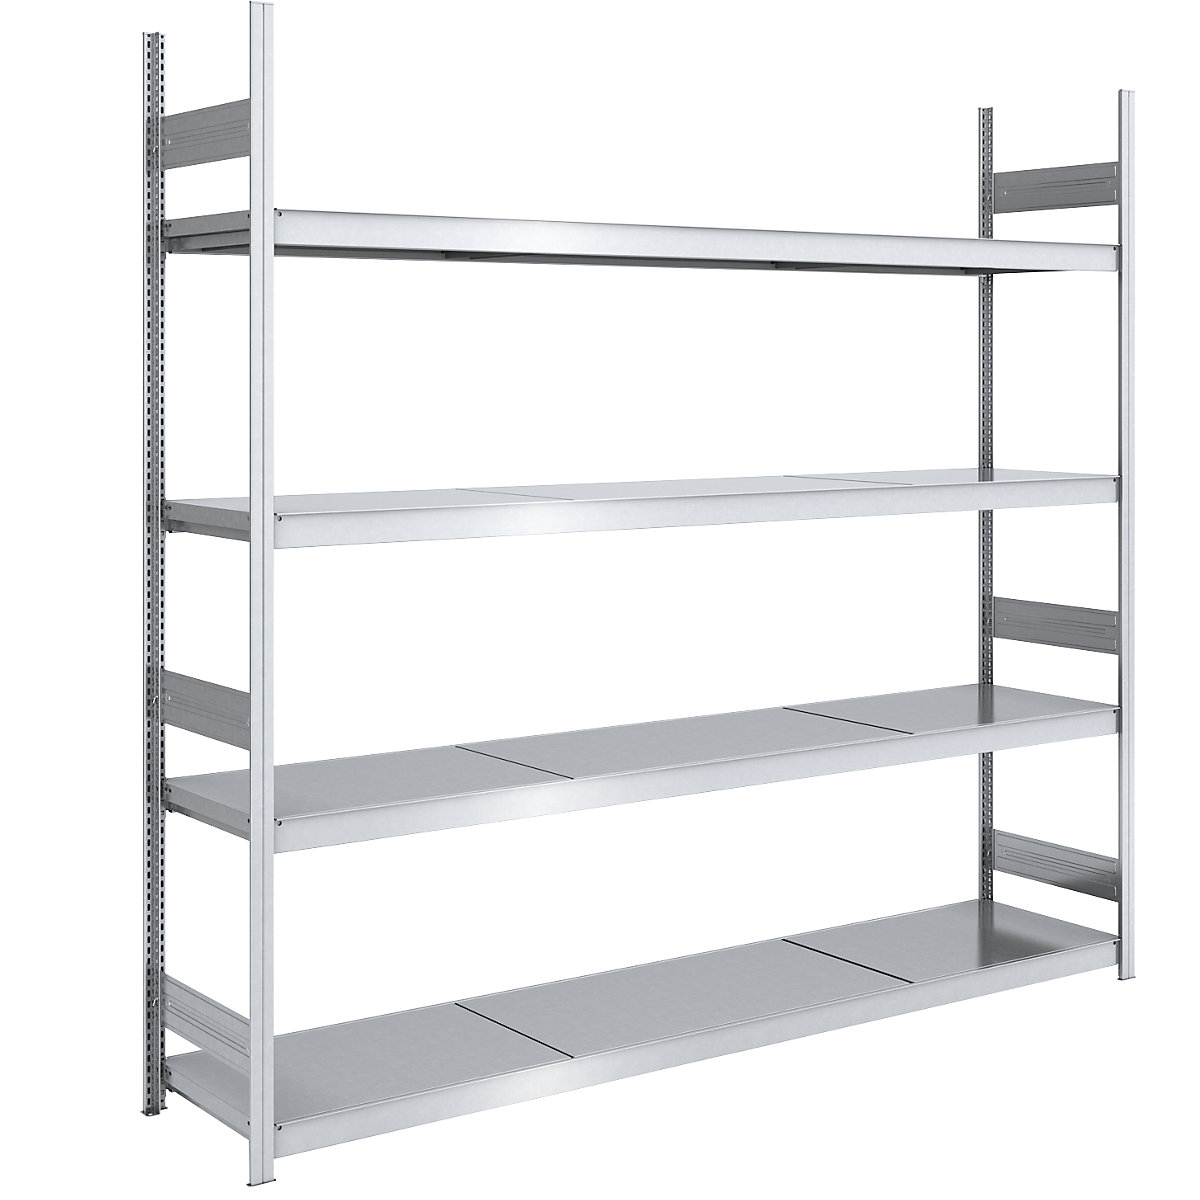 Wide span boltless shelving unit with steel shelves – hofe, height 2500 mm, shelf width 2500 mm, shelf depth 600 mm, standard shelf unit